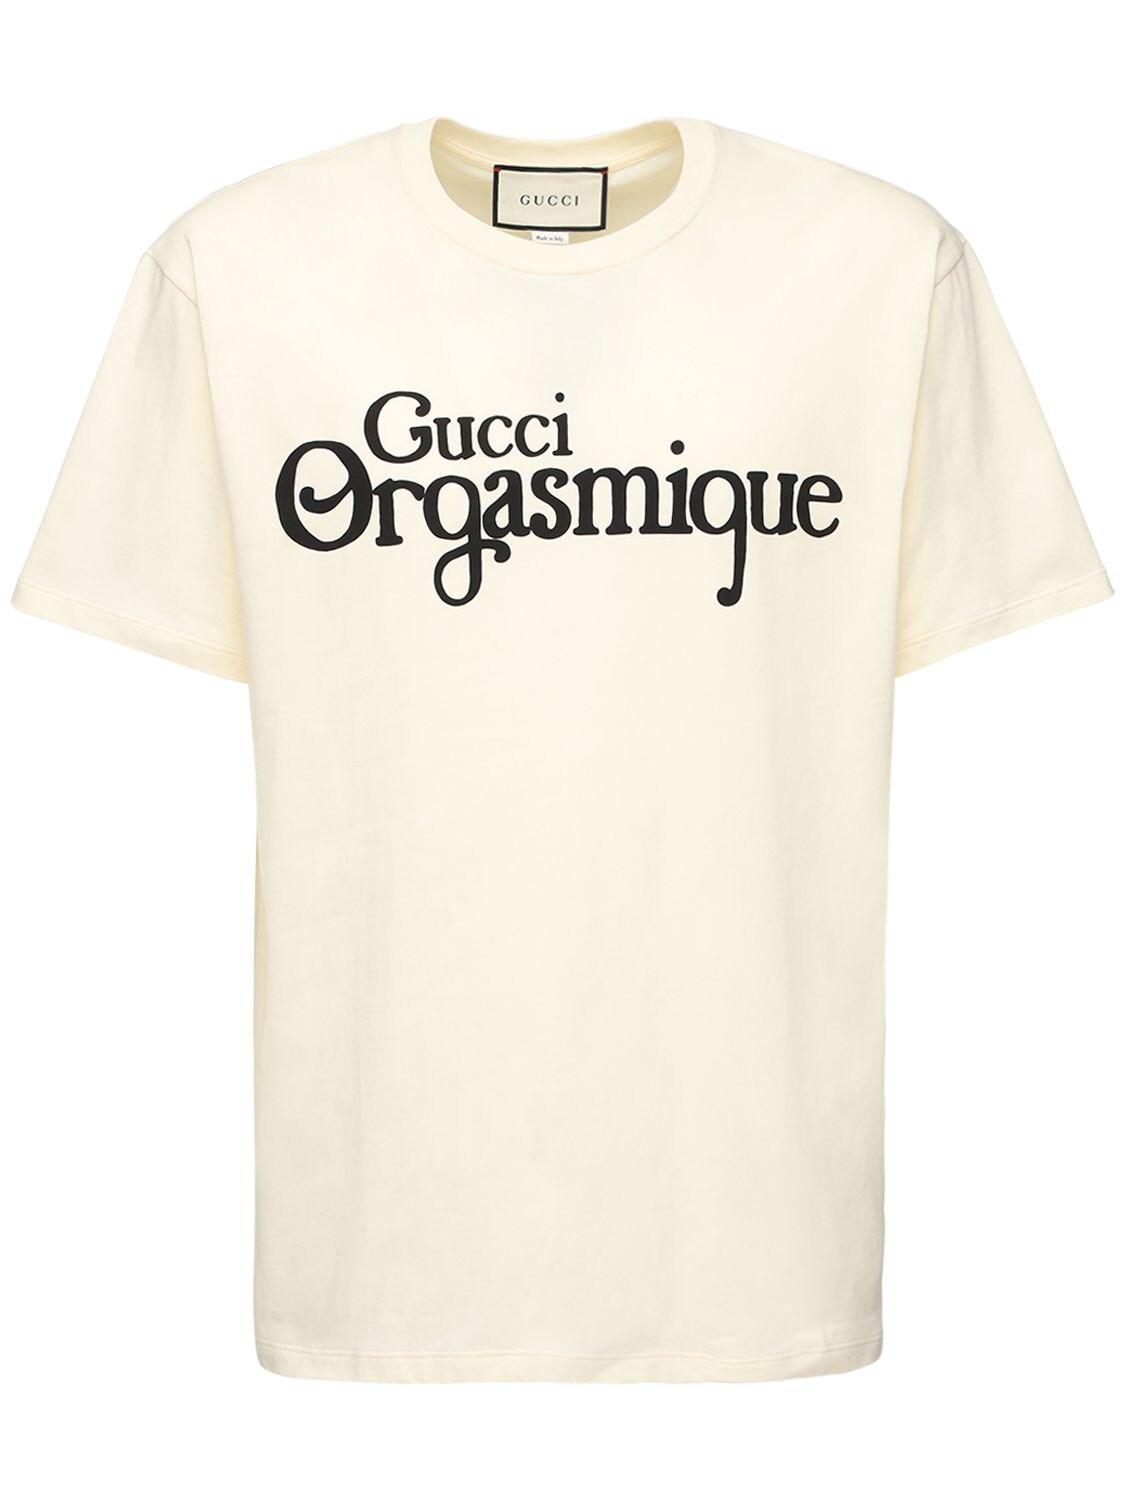 Gucci Orgasmique Print Cotton T-shirt in White for Men - Lyst